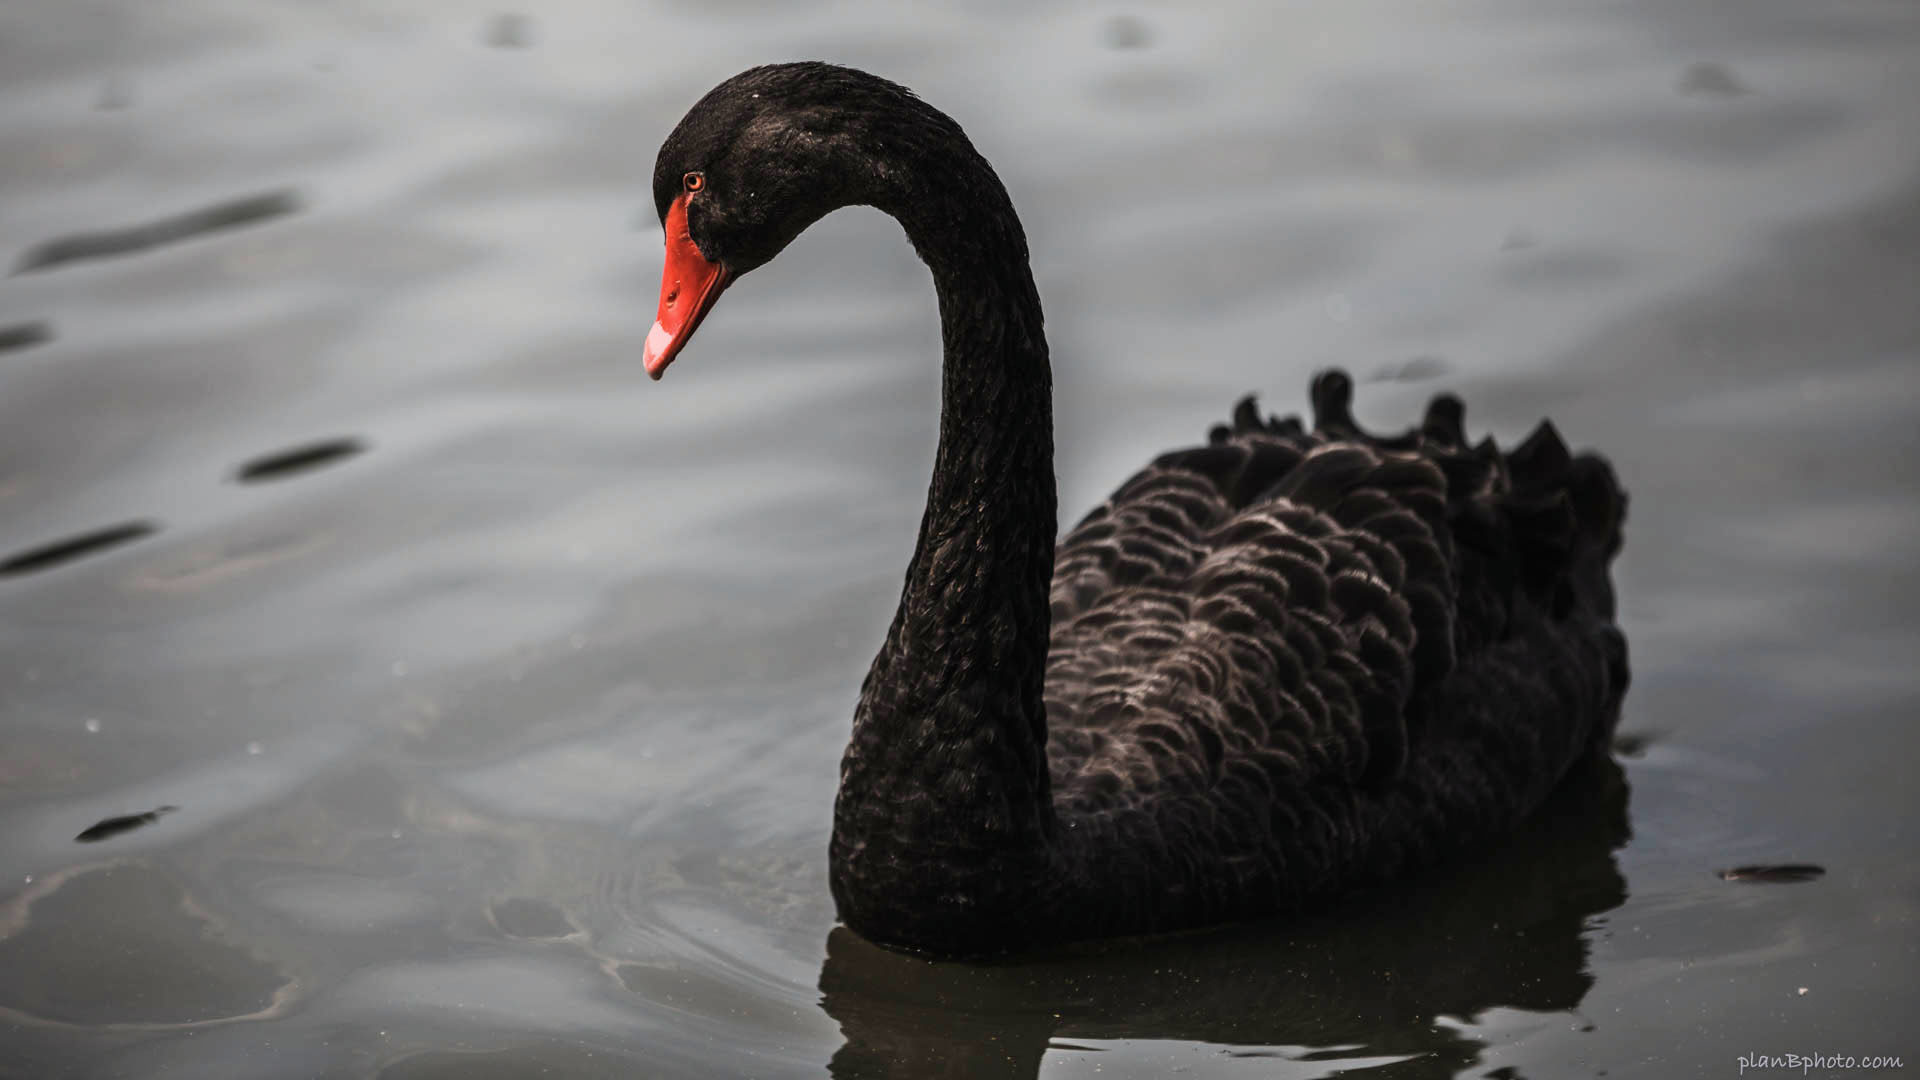 Black swan swimming near London